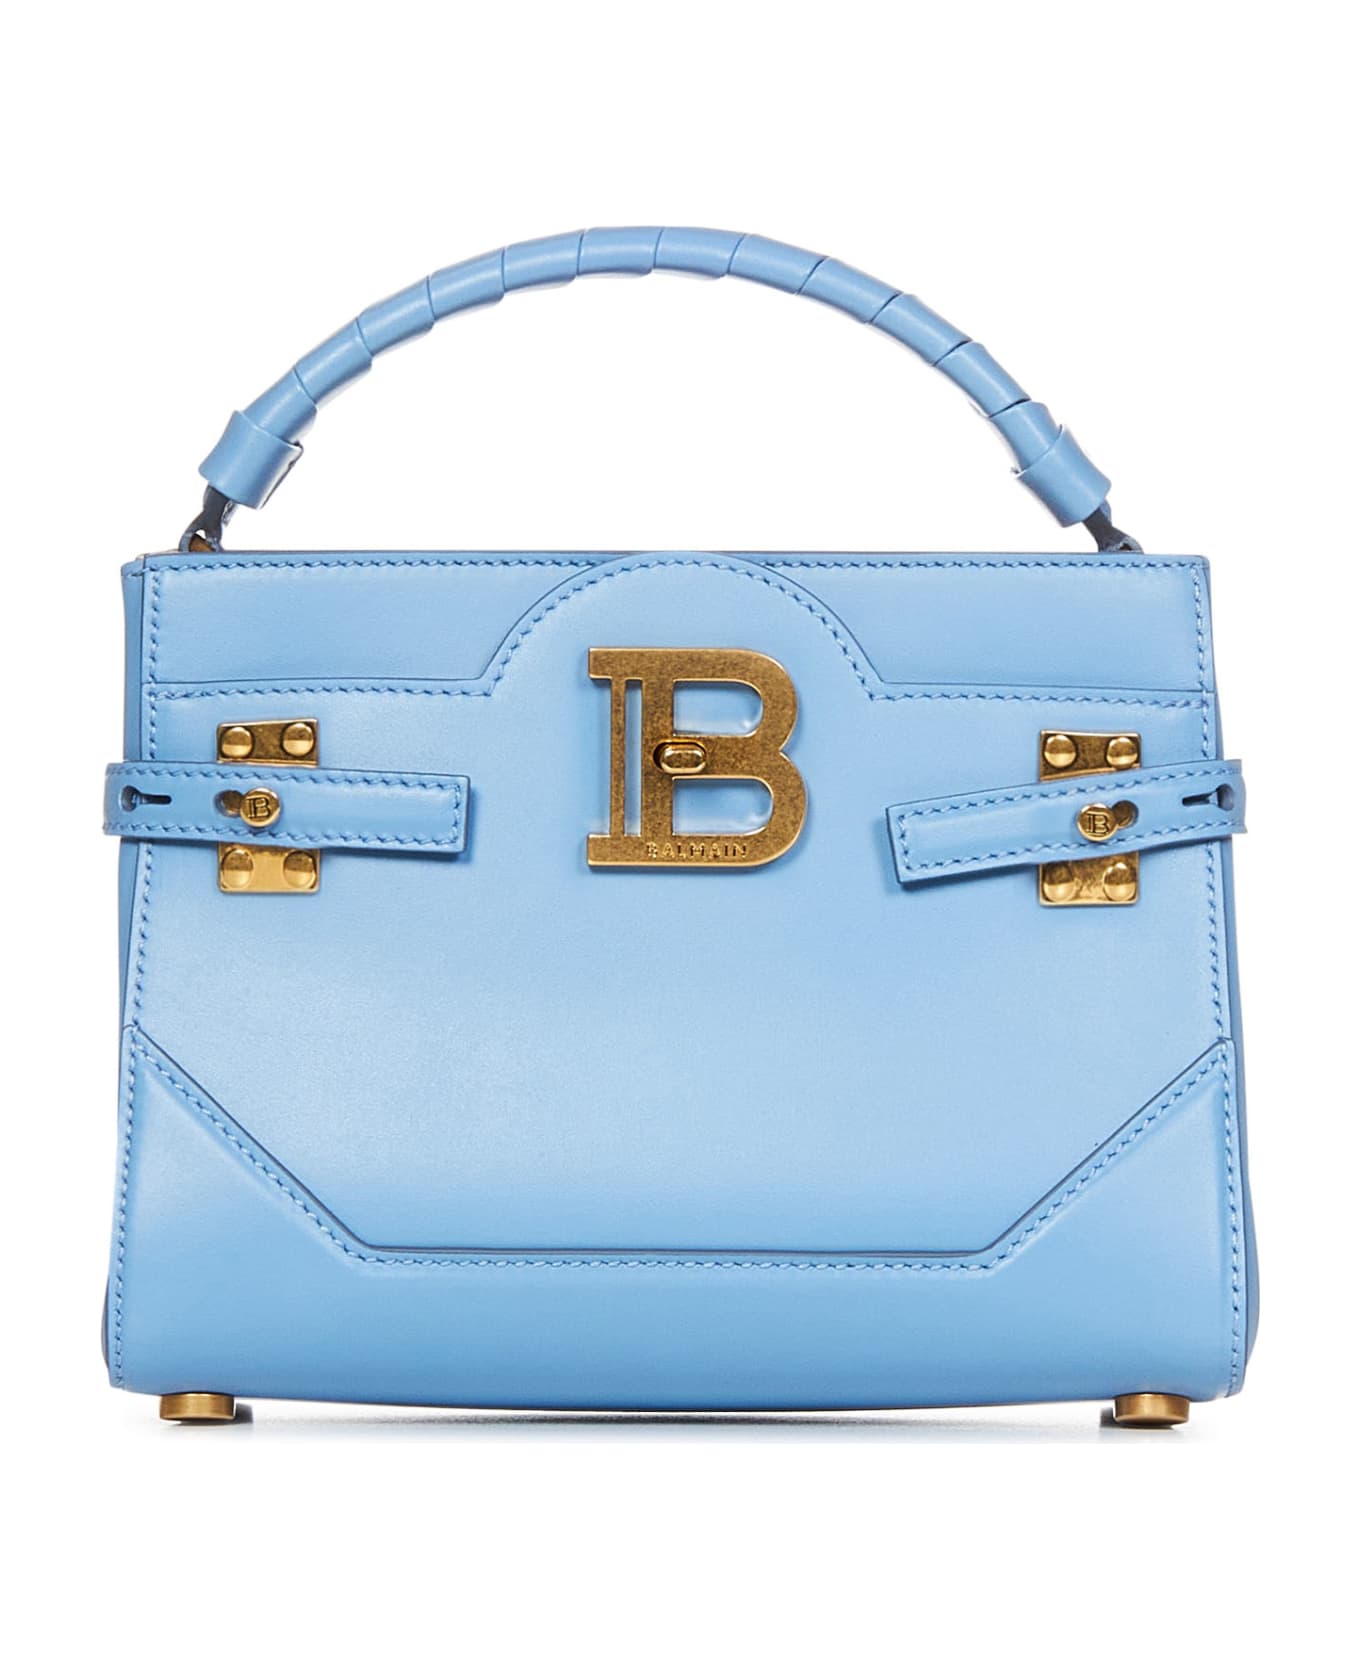 Balmain B-buzz 22 Handbag - Light blue